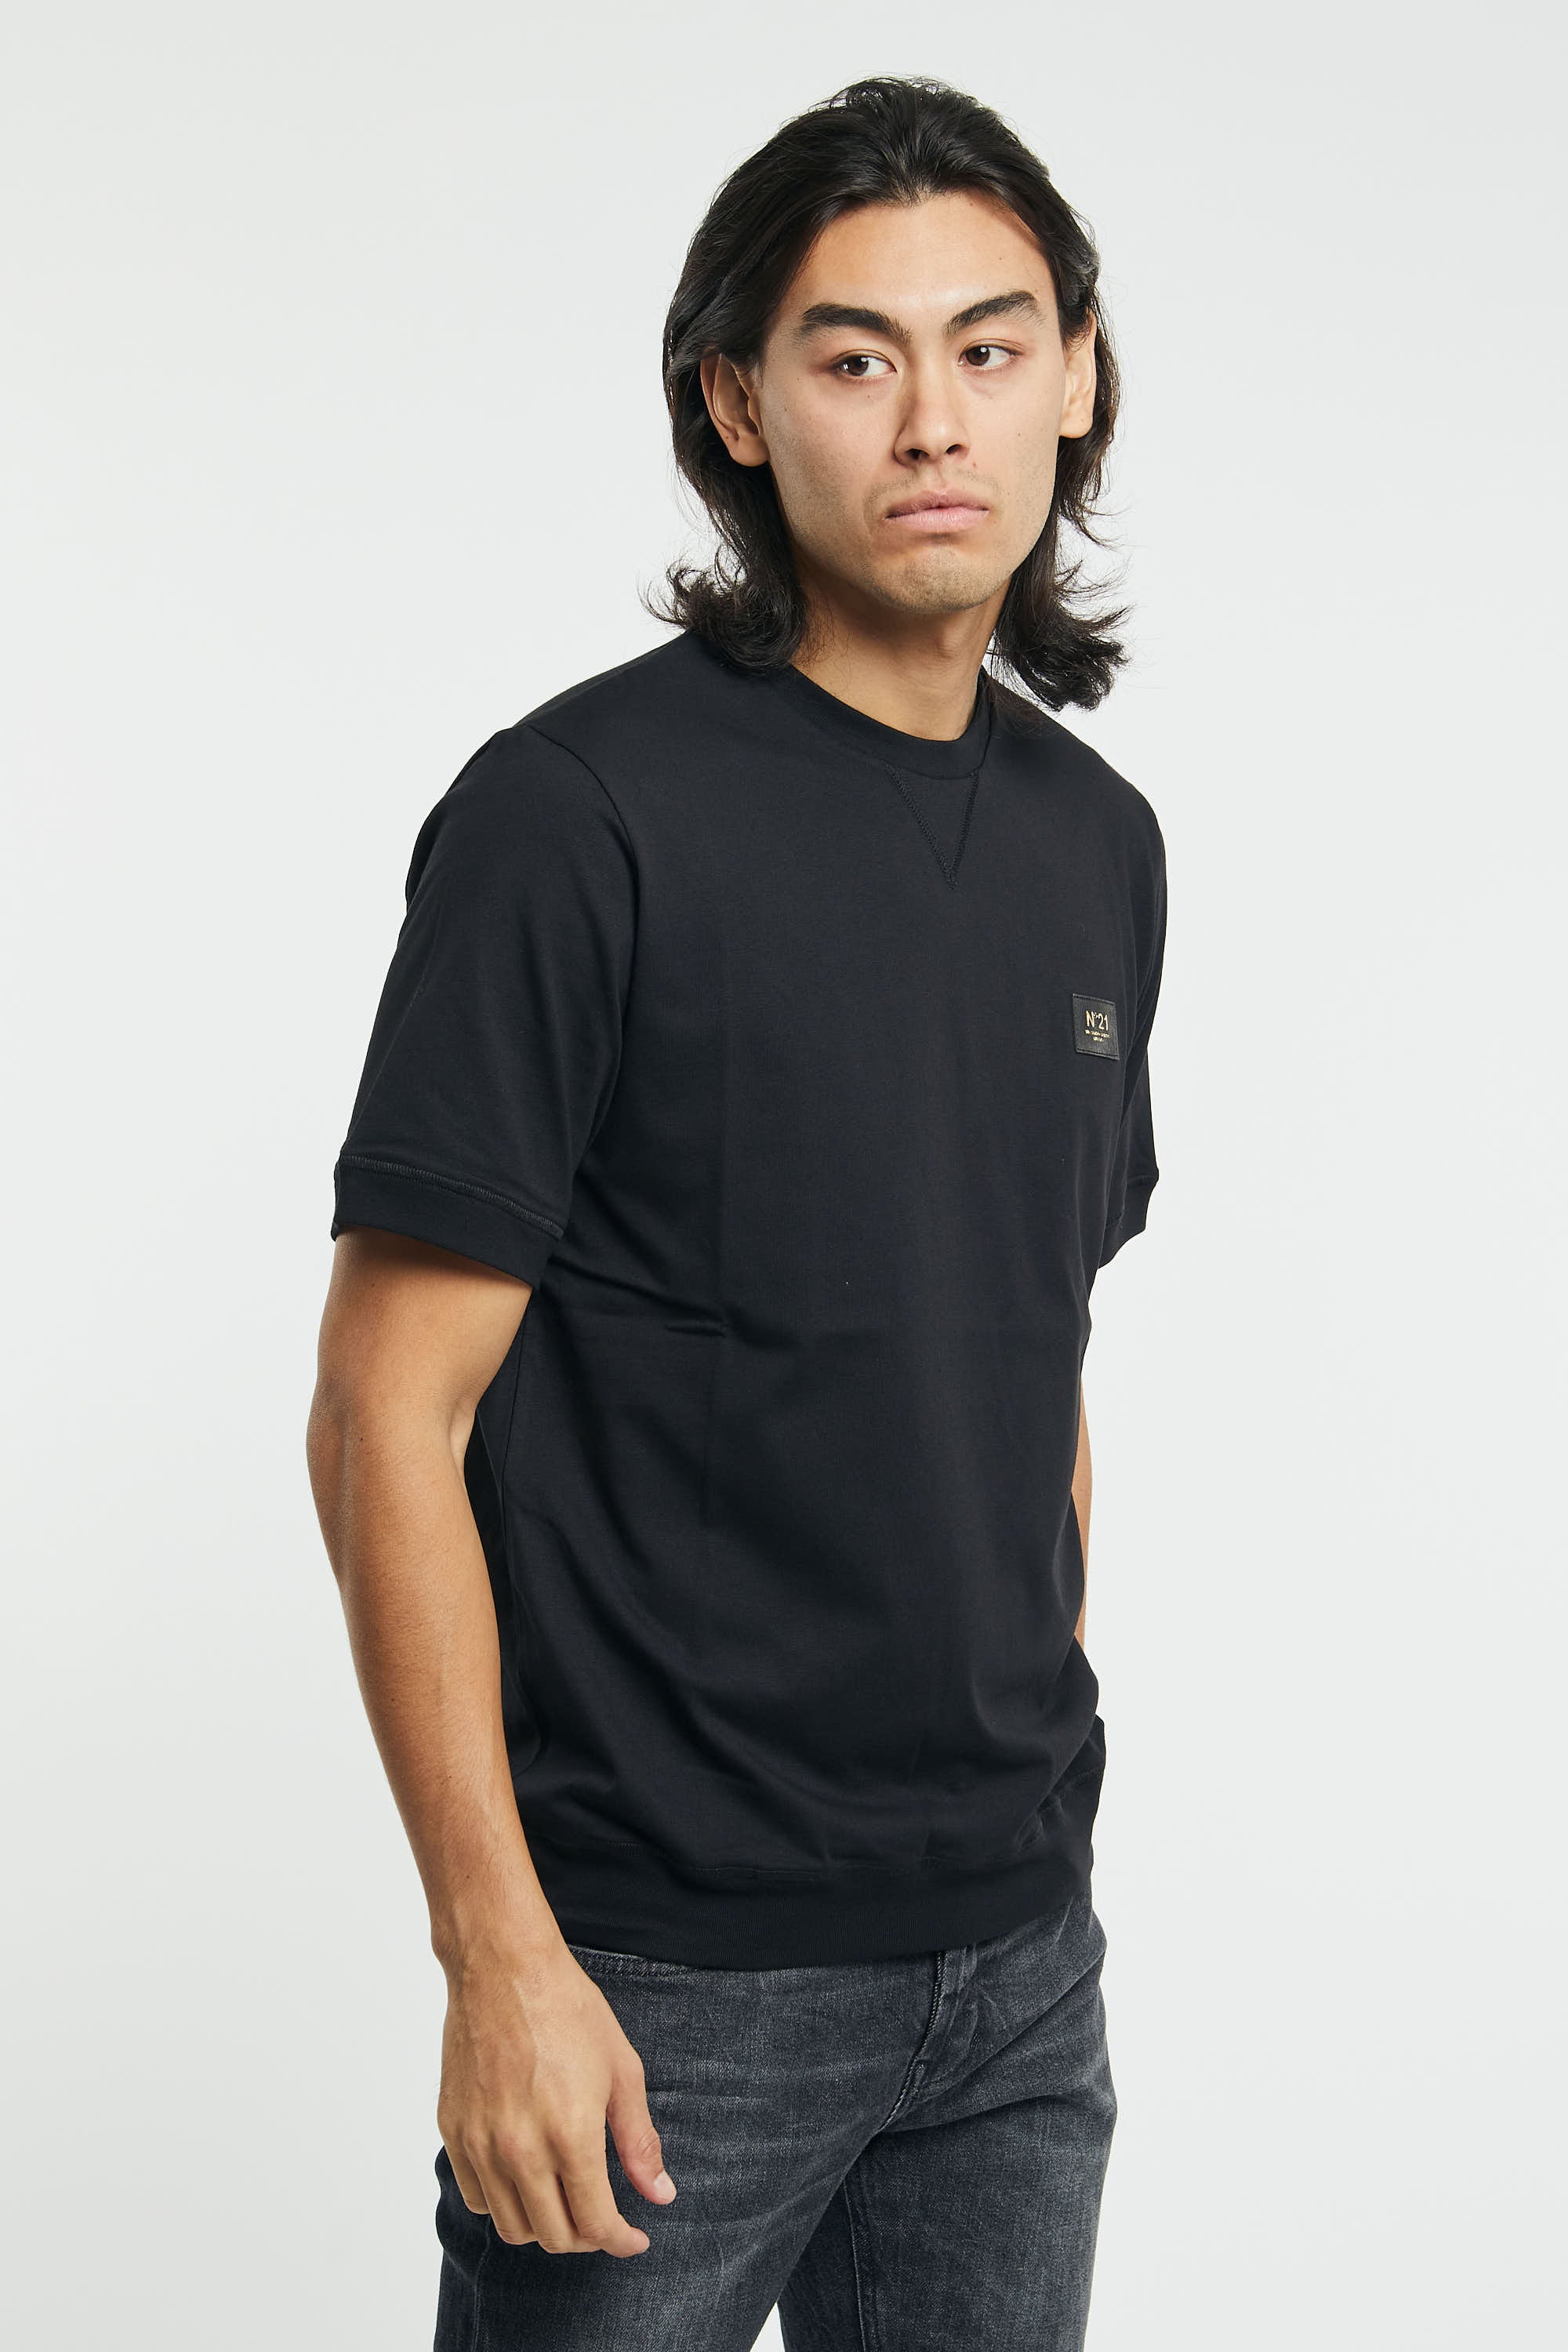 N°21 Cotton/Eco-leather T-Shirt Black - 6